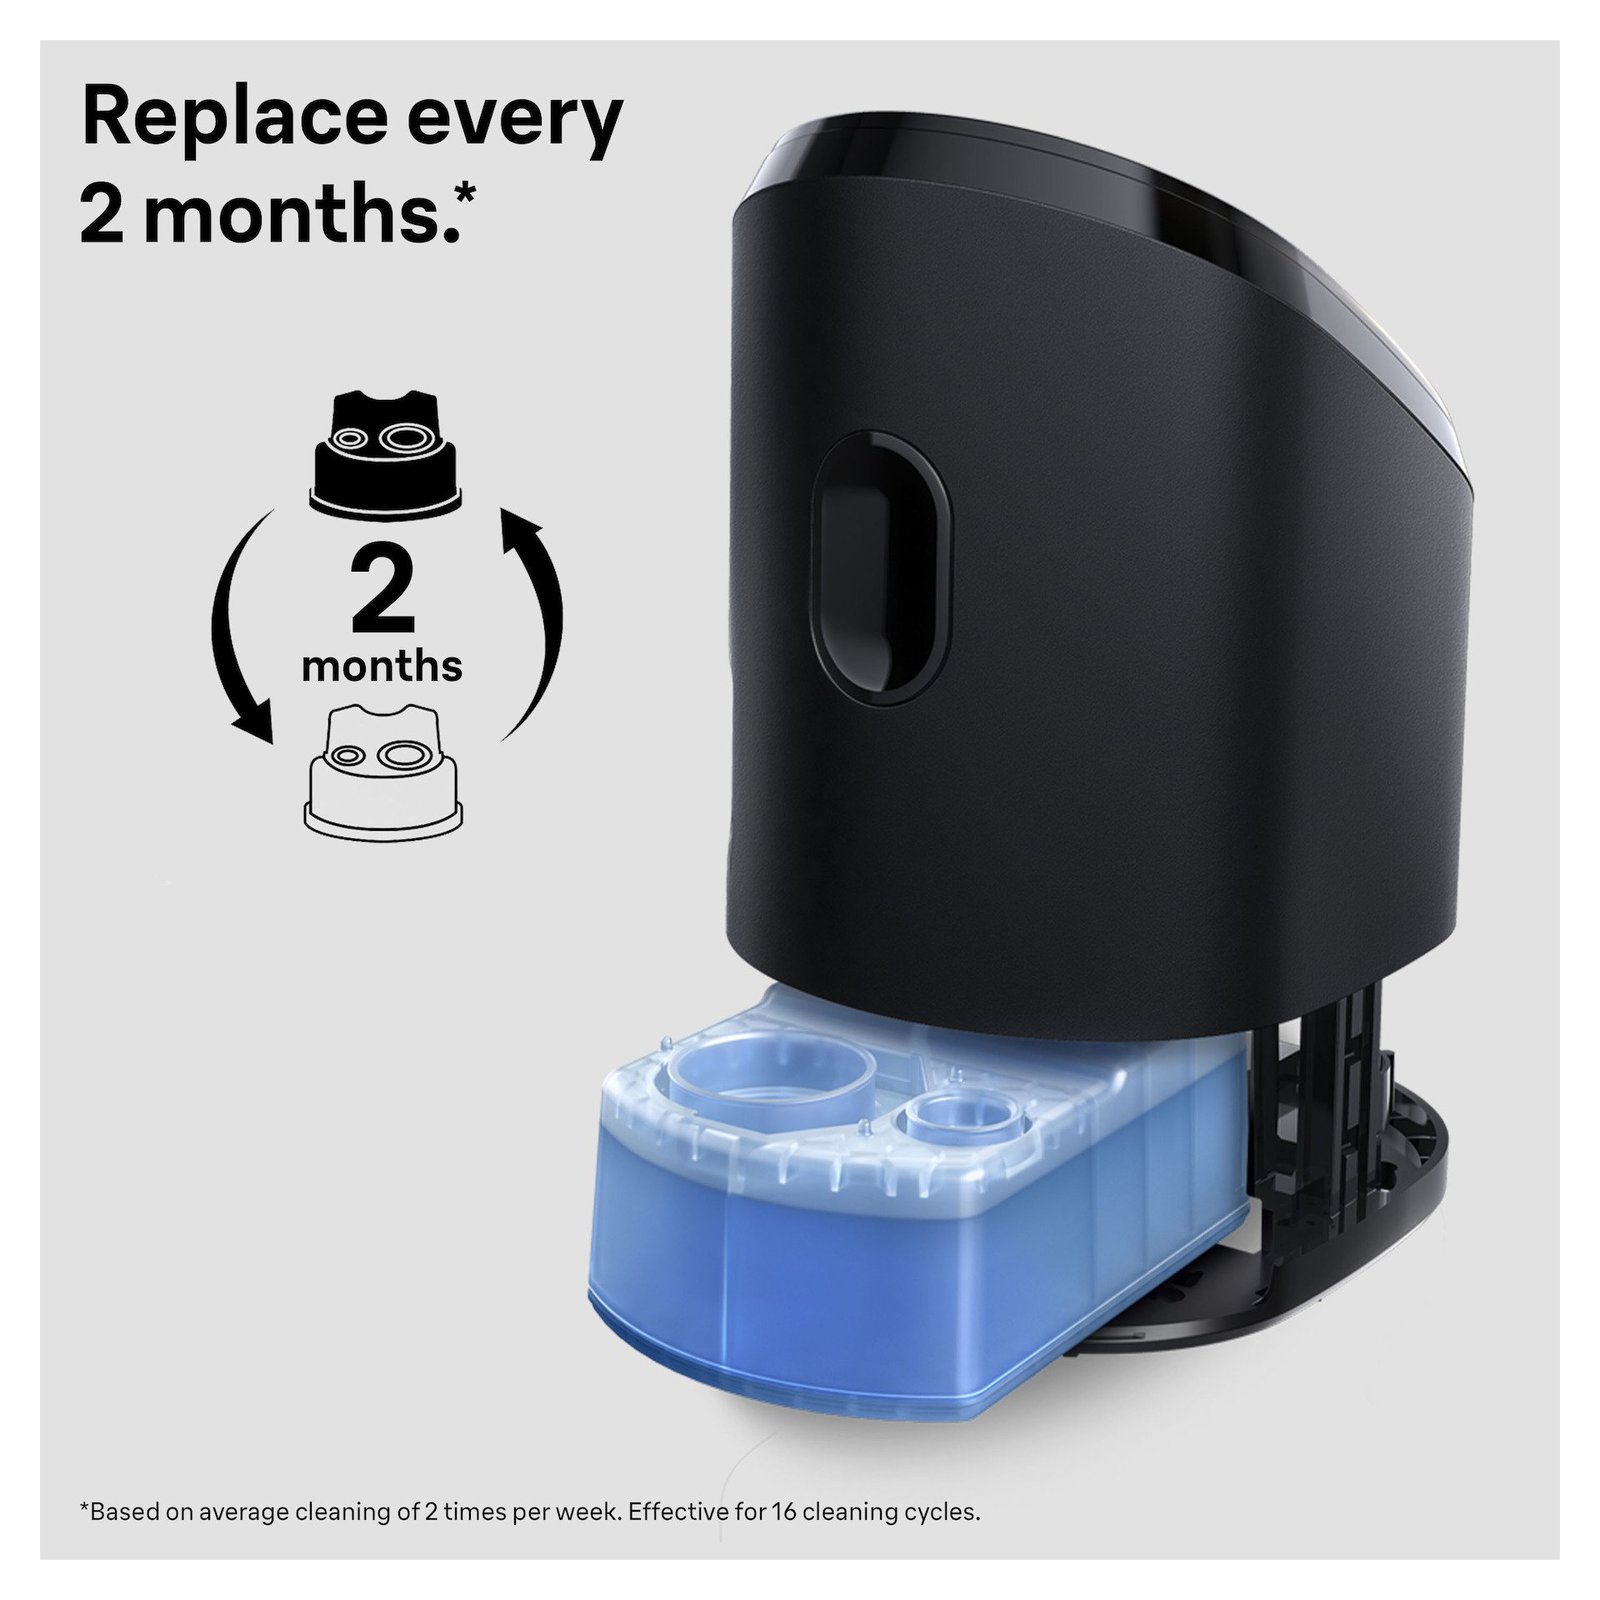 Braun 3in1 ShaverCare Refiller Hygienisk rengöring för SmartCare Center, 4‑pack